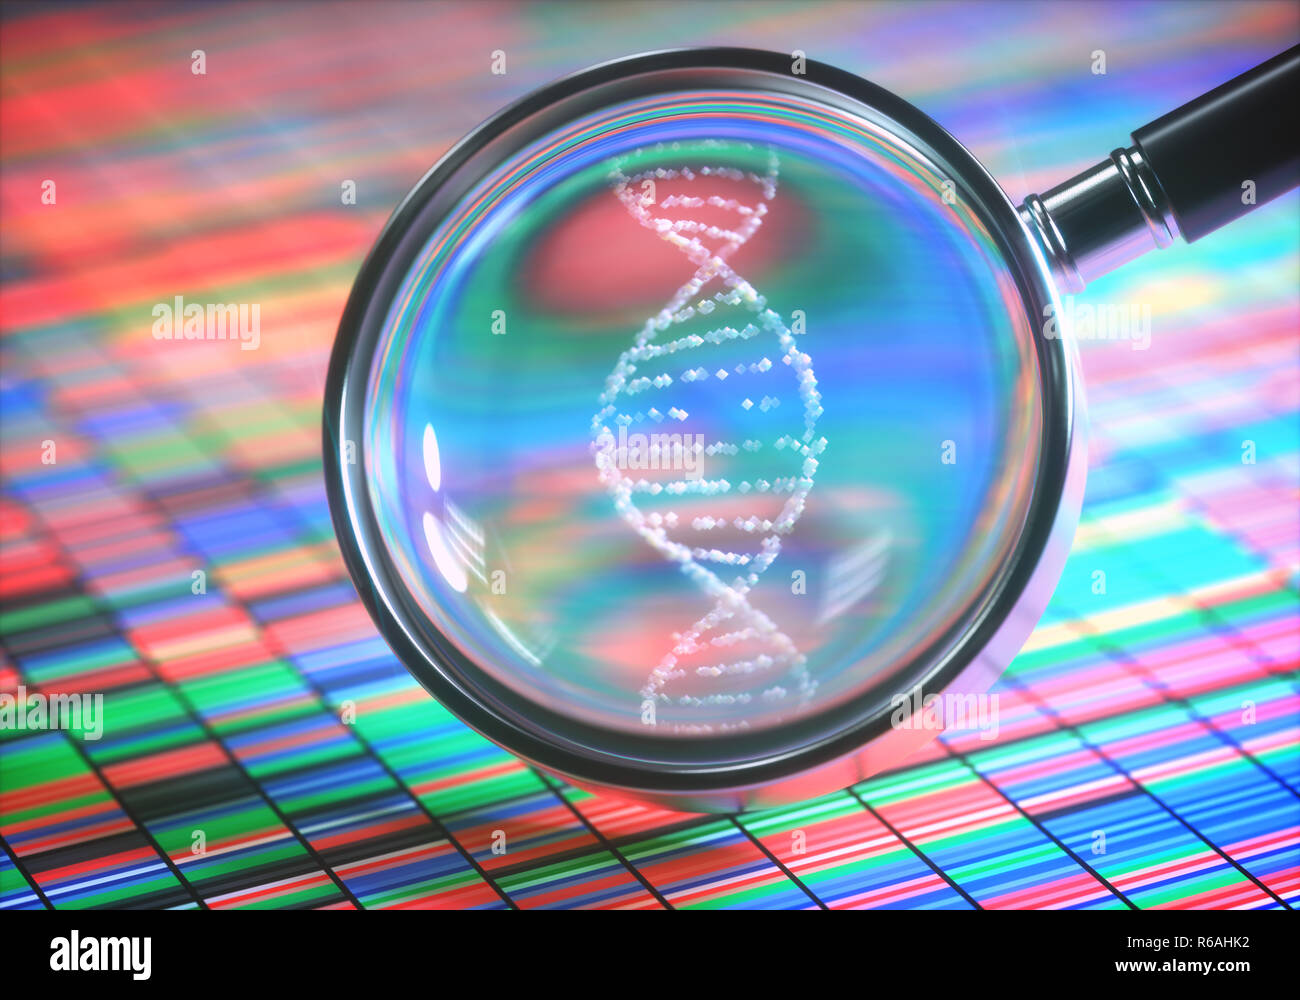 Amplifying DNA Helix Stock Photo